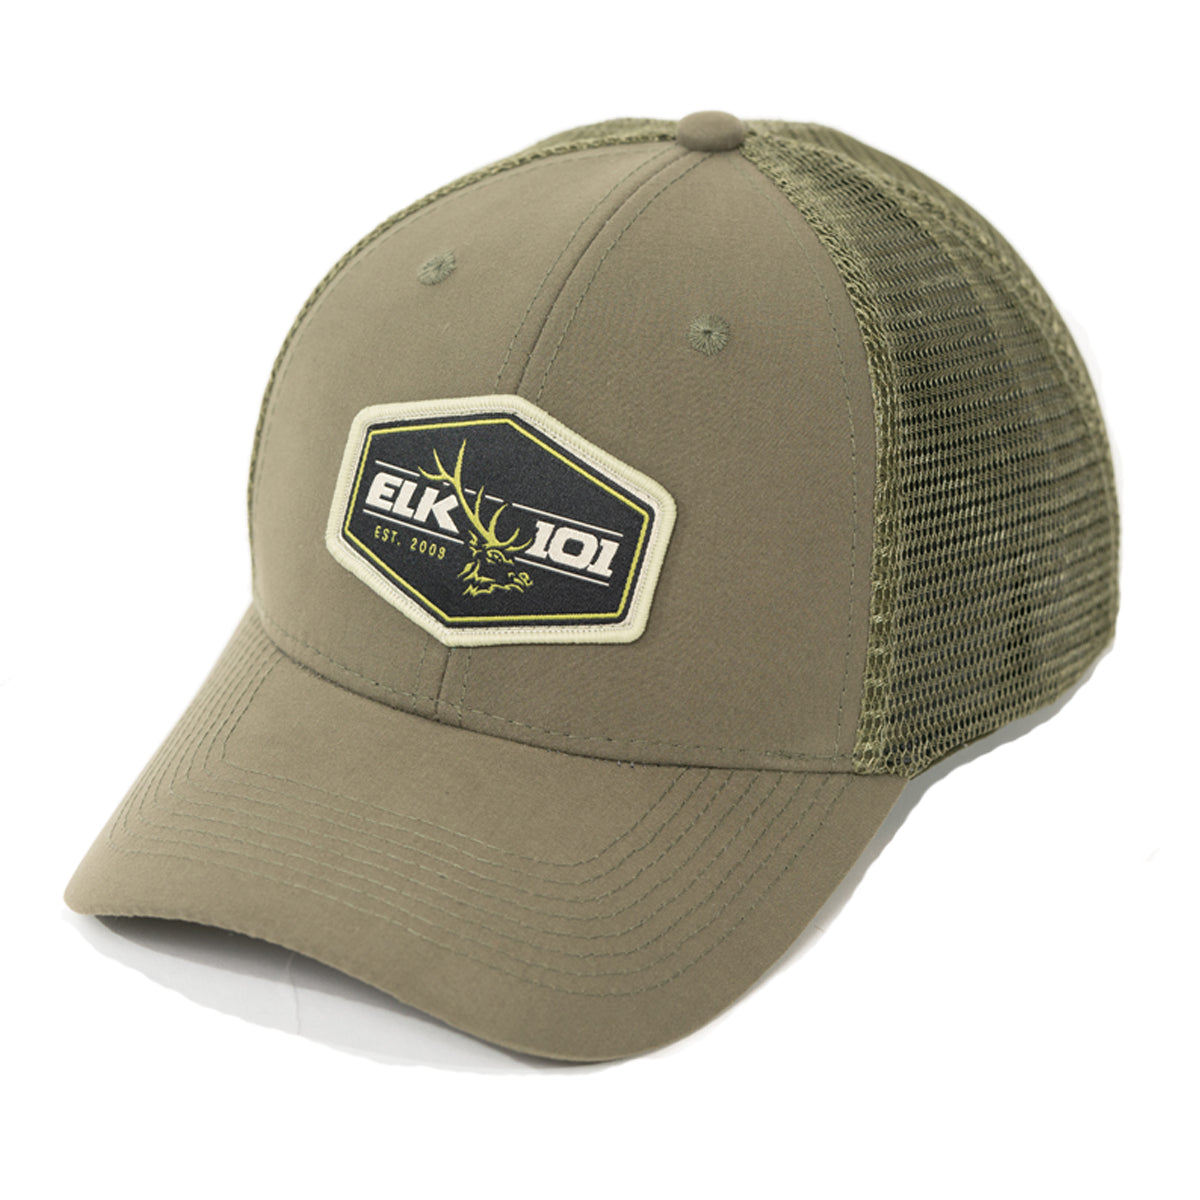 Elk101 Green Mist Trucker Hat